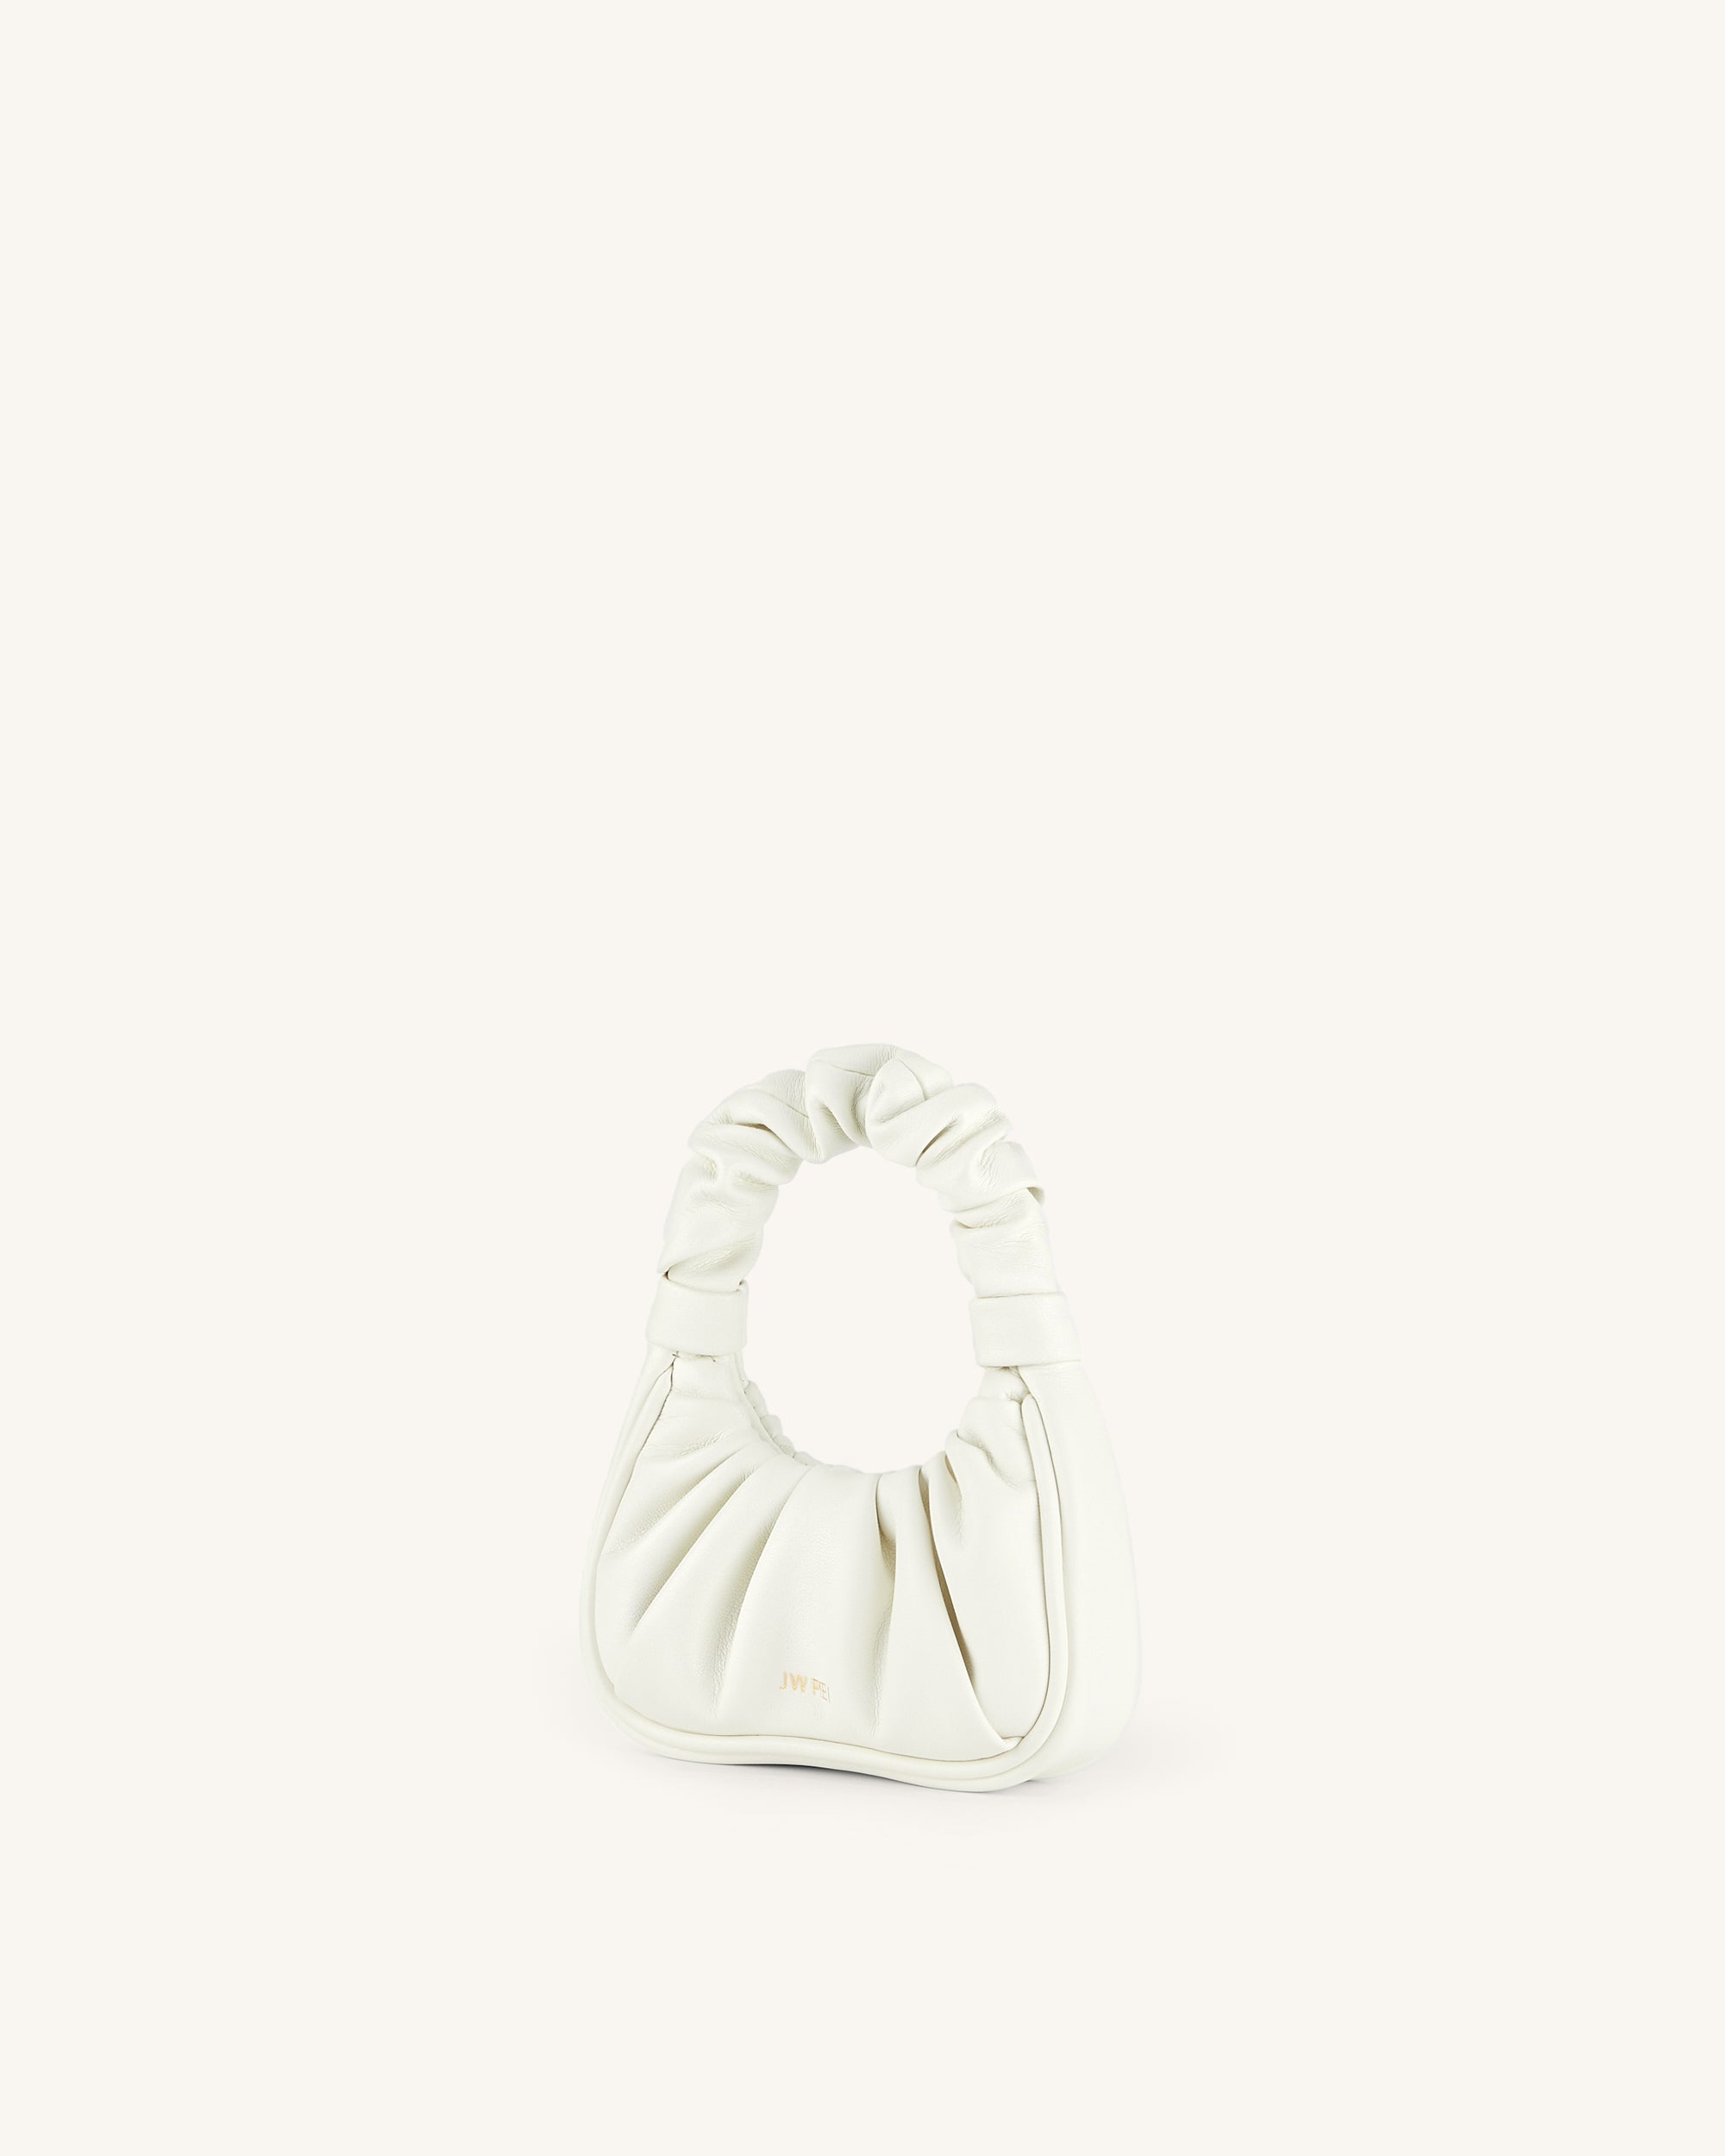 Gabbi Super Mini Bag - Ivory - JW PEI